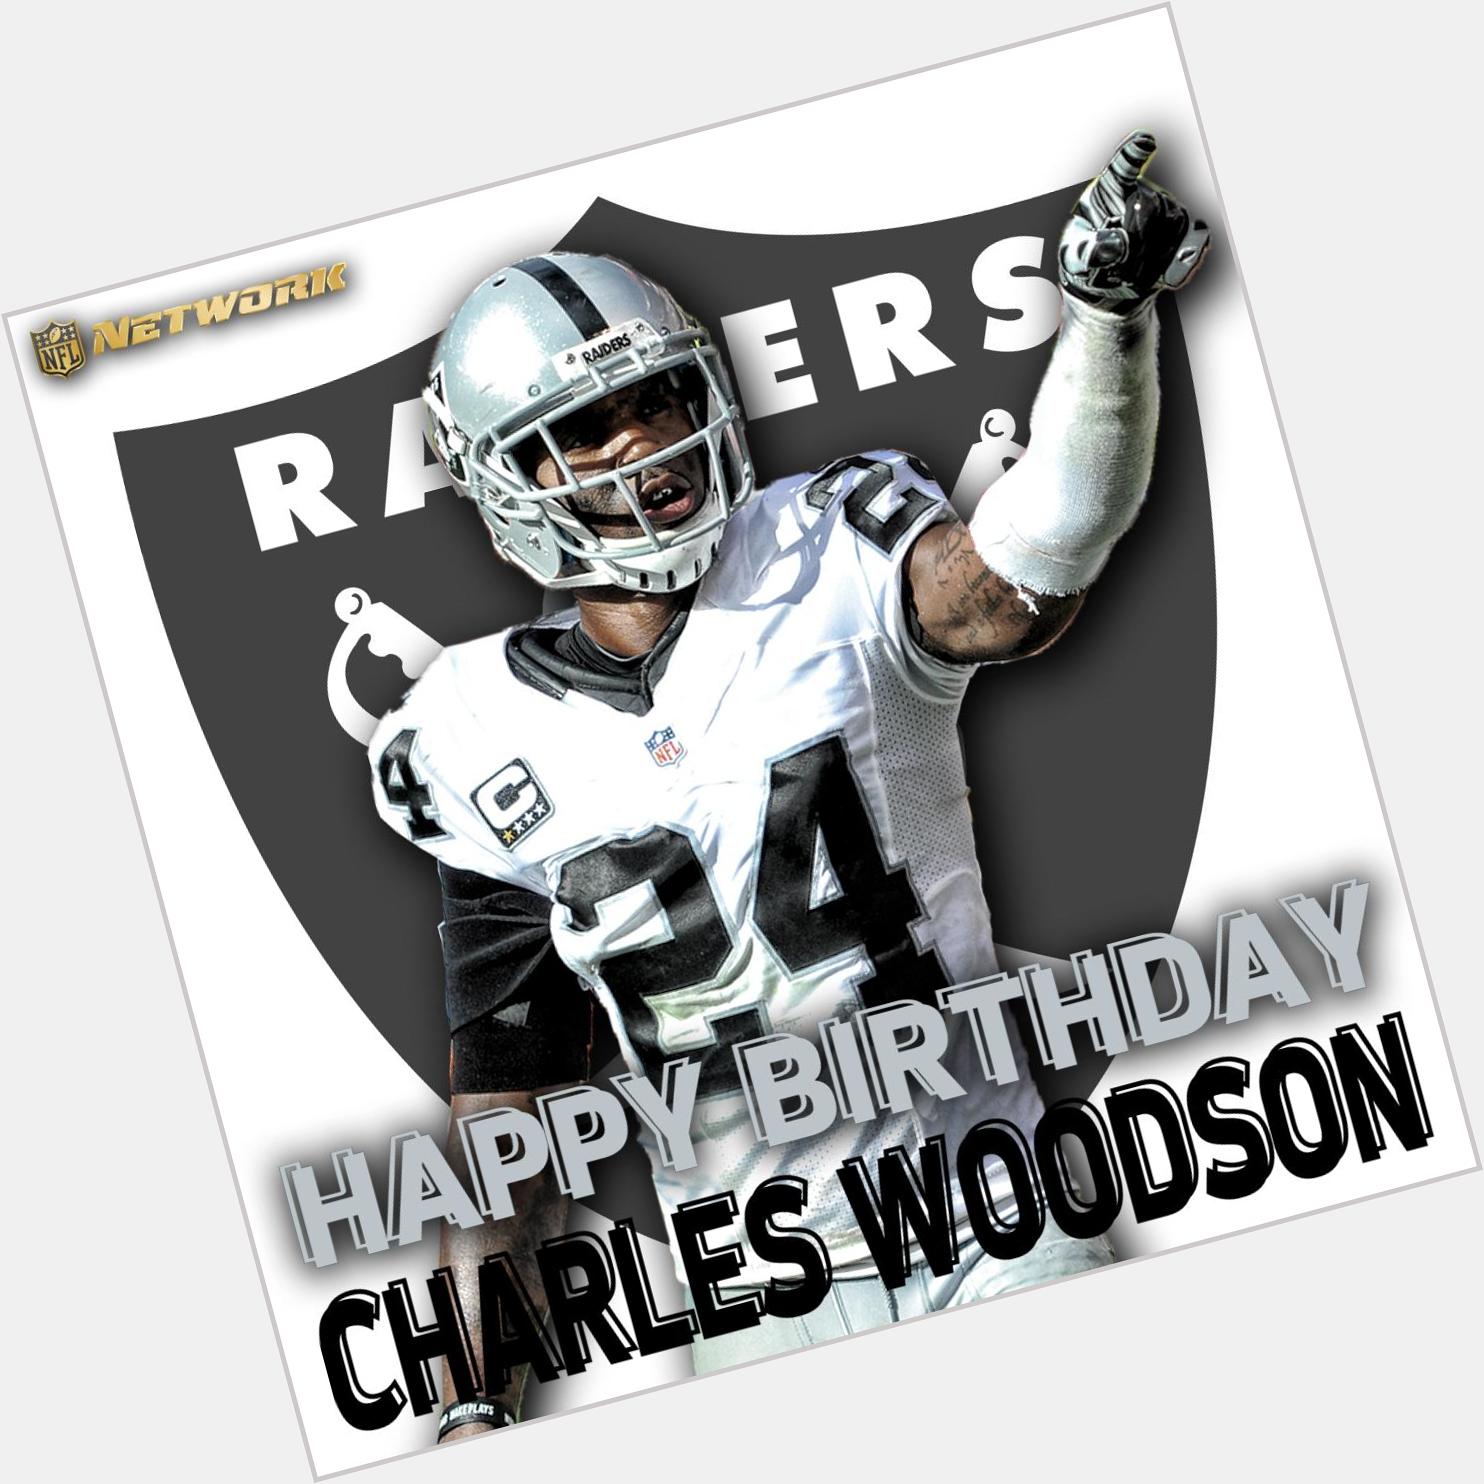 39 and still ball hawking.

Happy birthday, Charles Woodson! 